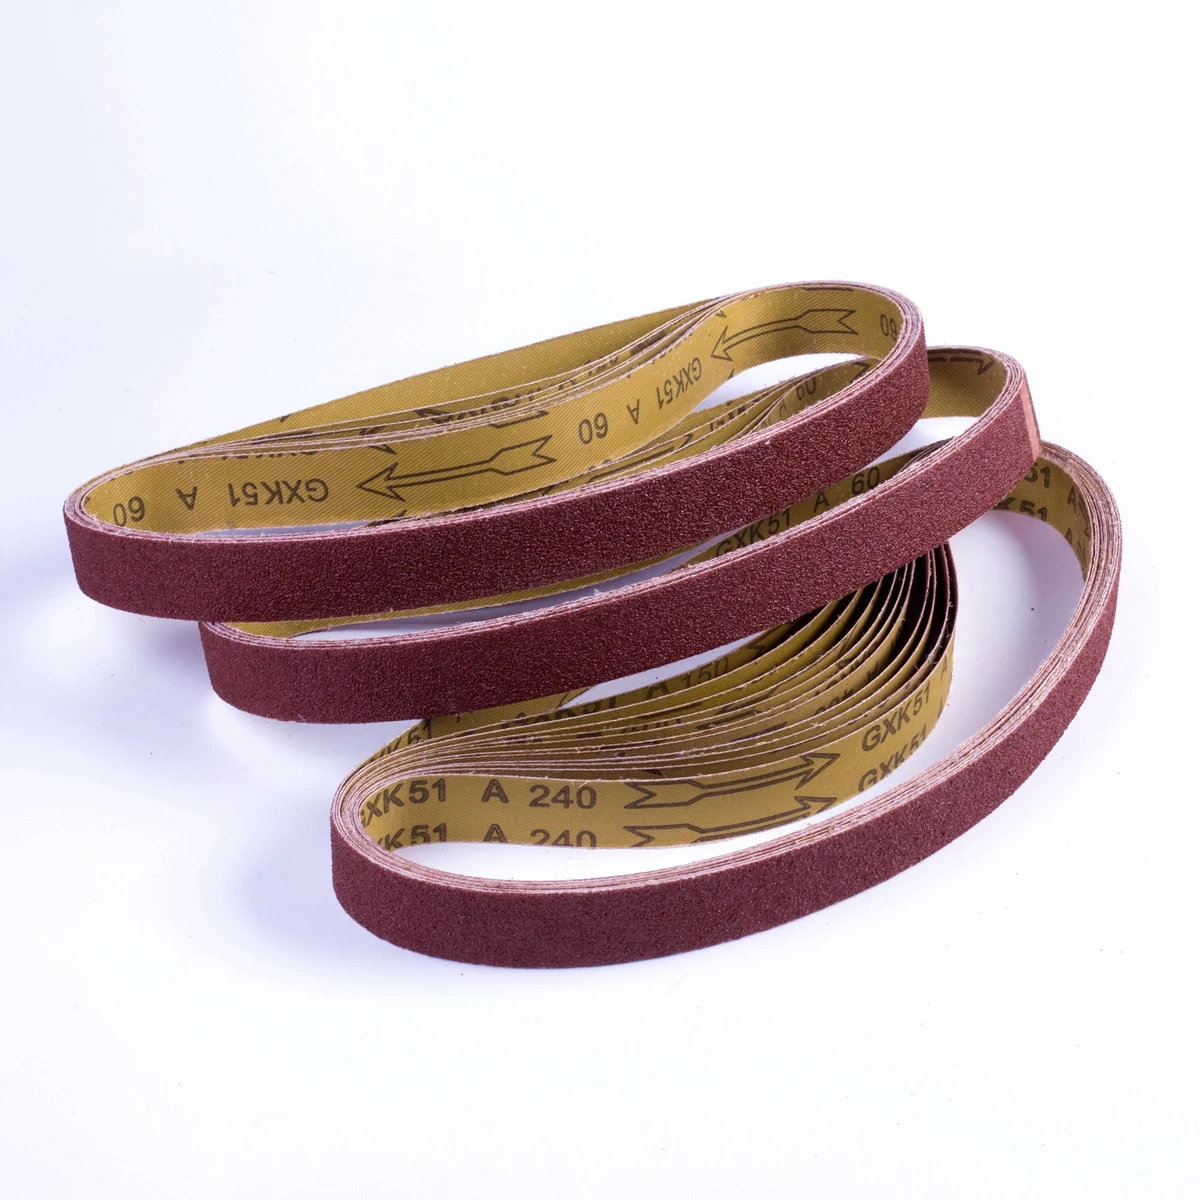 15 Pcs 1 x 42 Inch Assorted Sanding Belts Sander Belts 1x42 in 80/120/150/240/400 Grit 